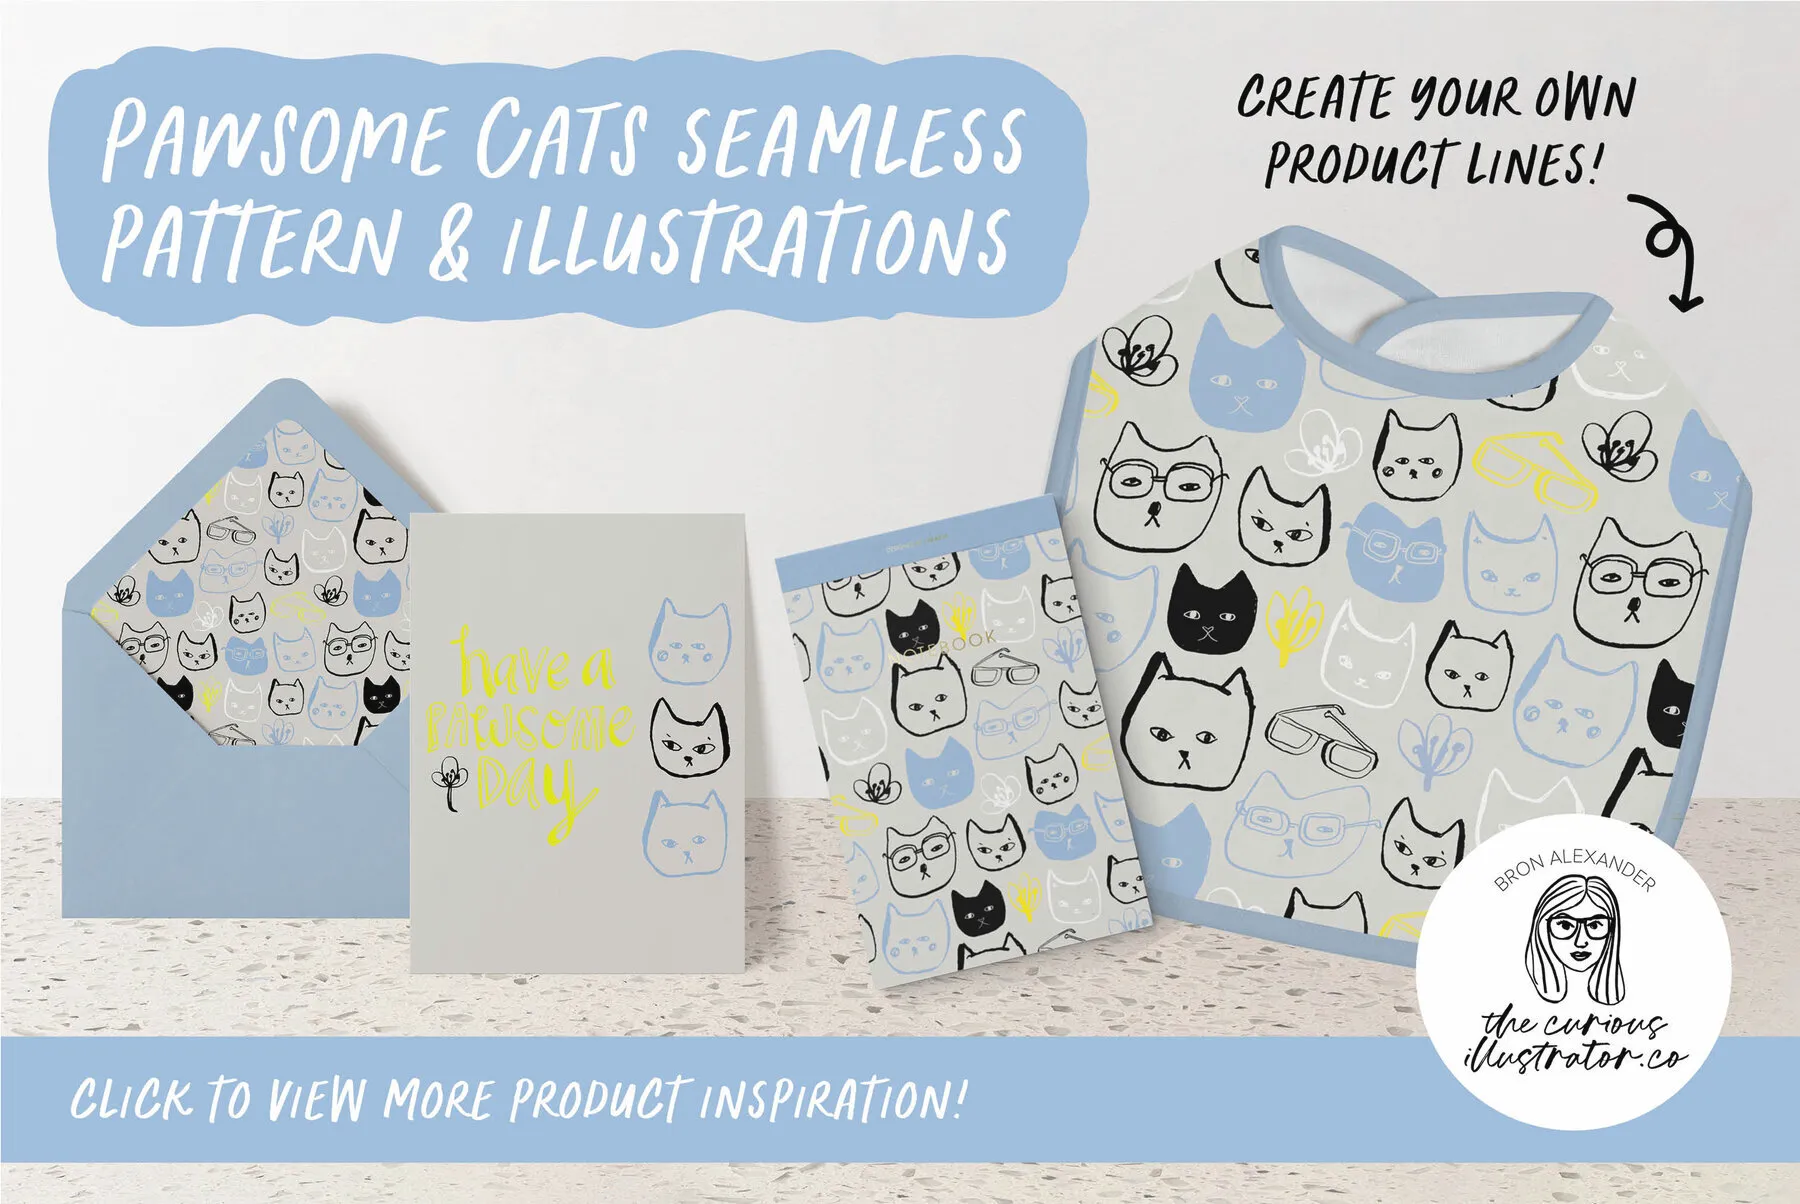 Pawsome Cats Seamless Pattern & Illustrations